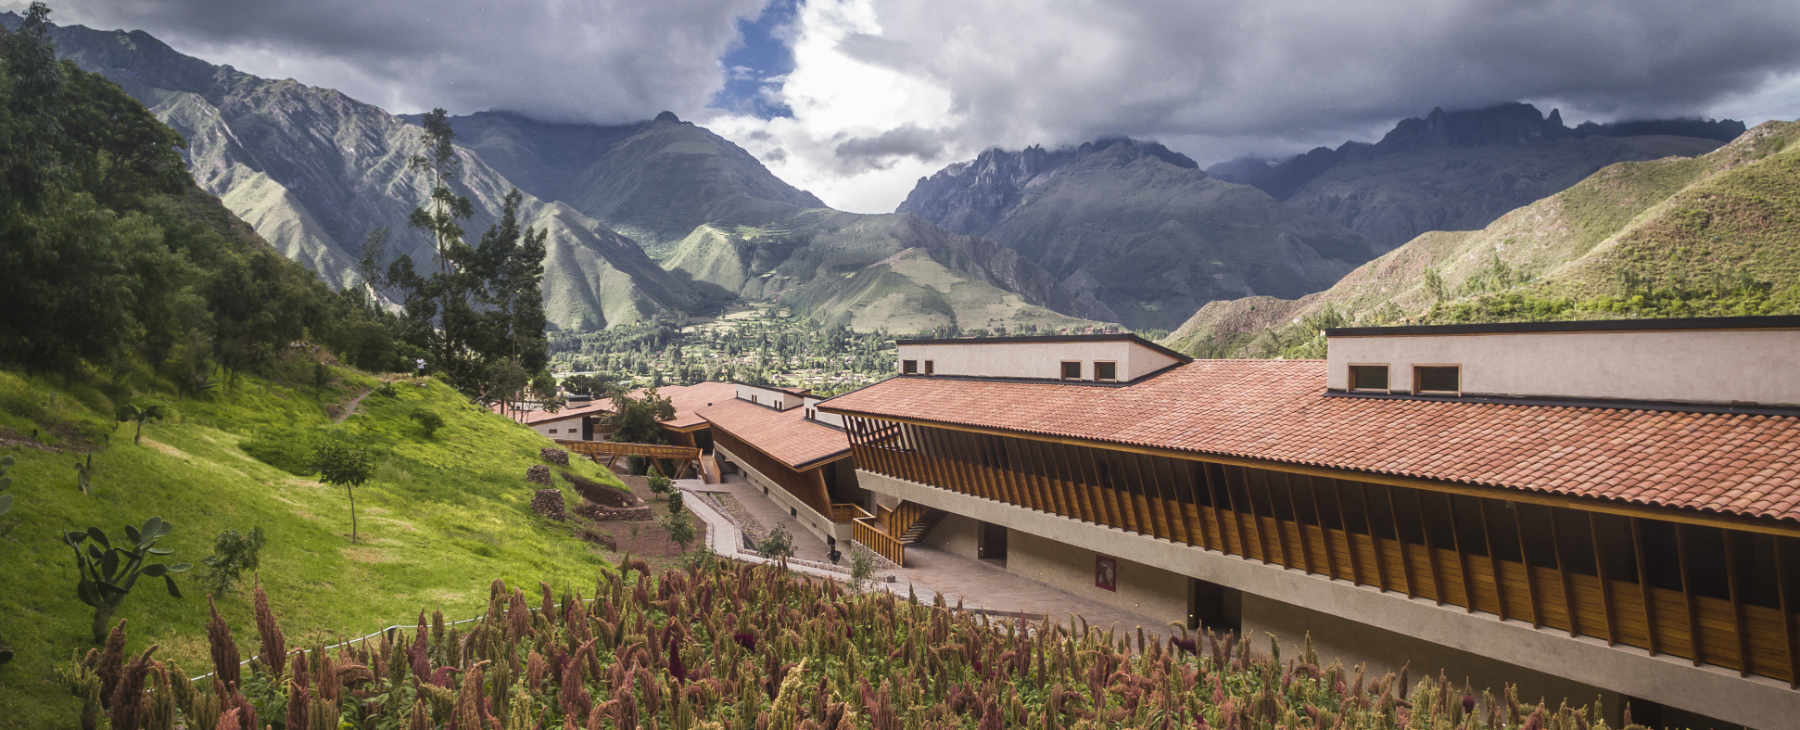 Luxushotel Explora Vale Sagrado Peru